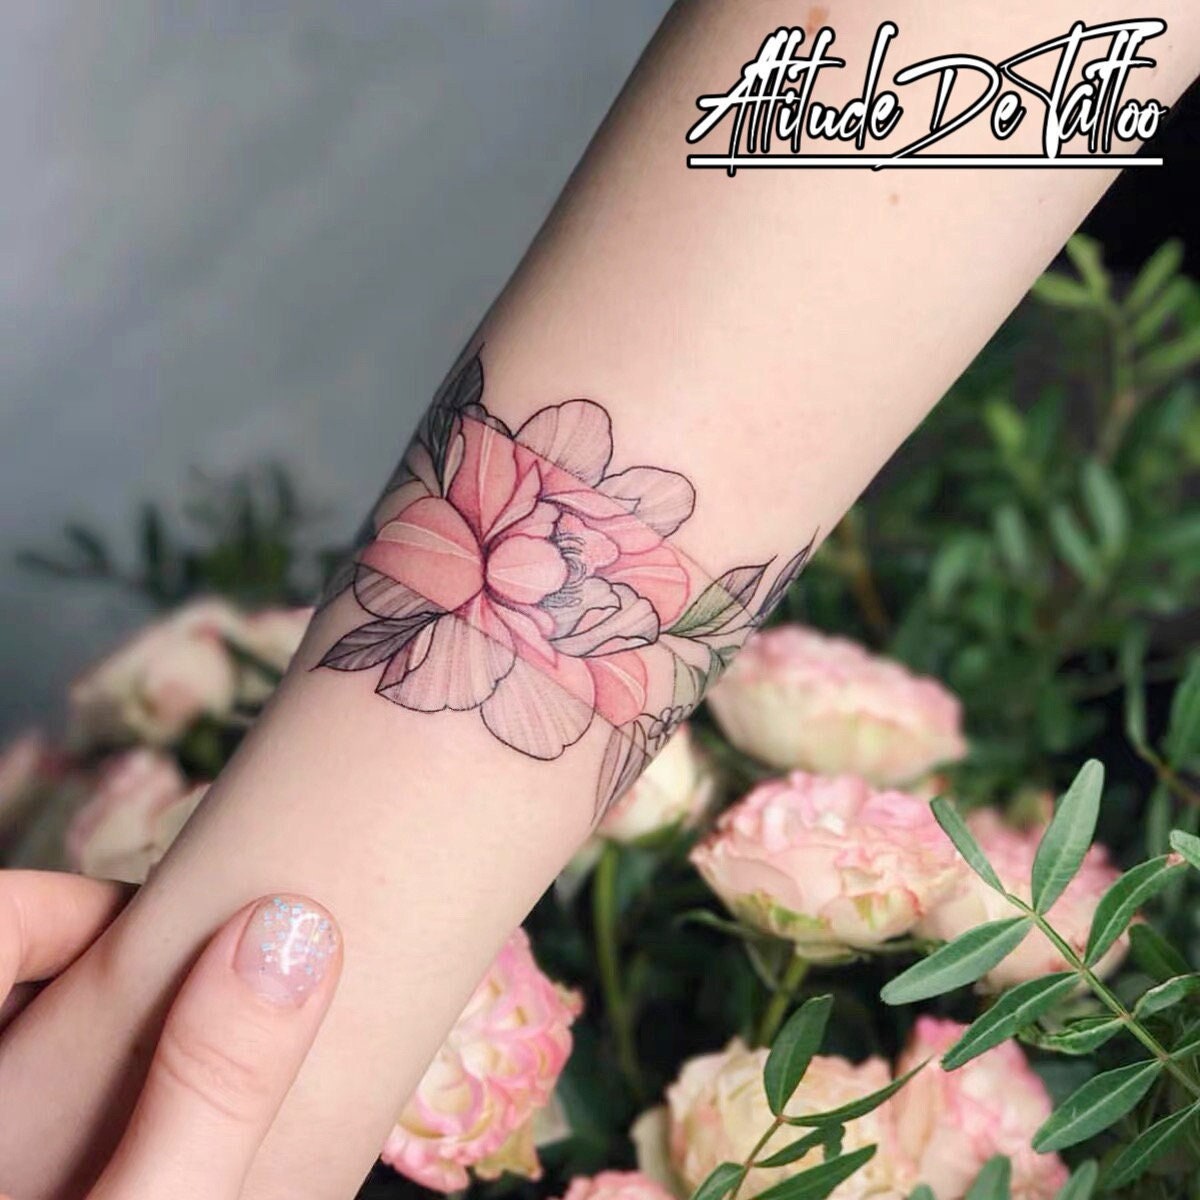 Fine line rose tattoo on the wrist.